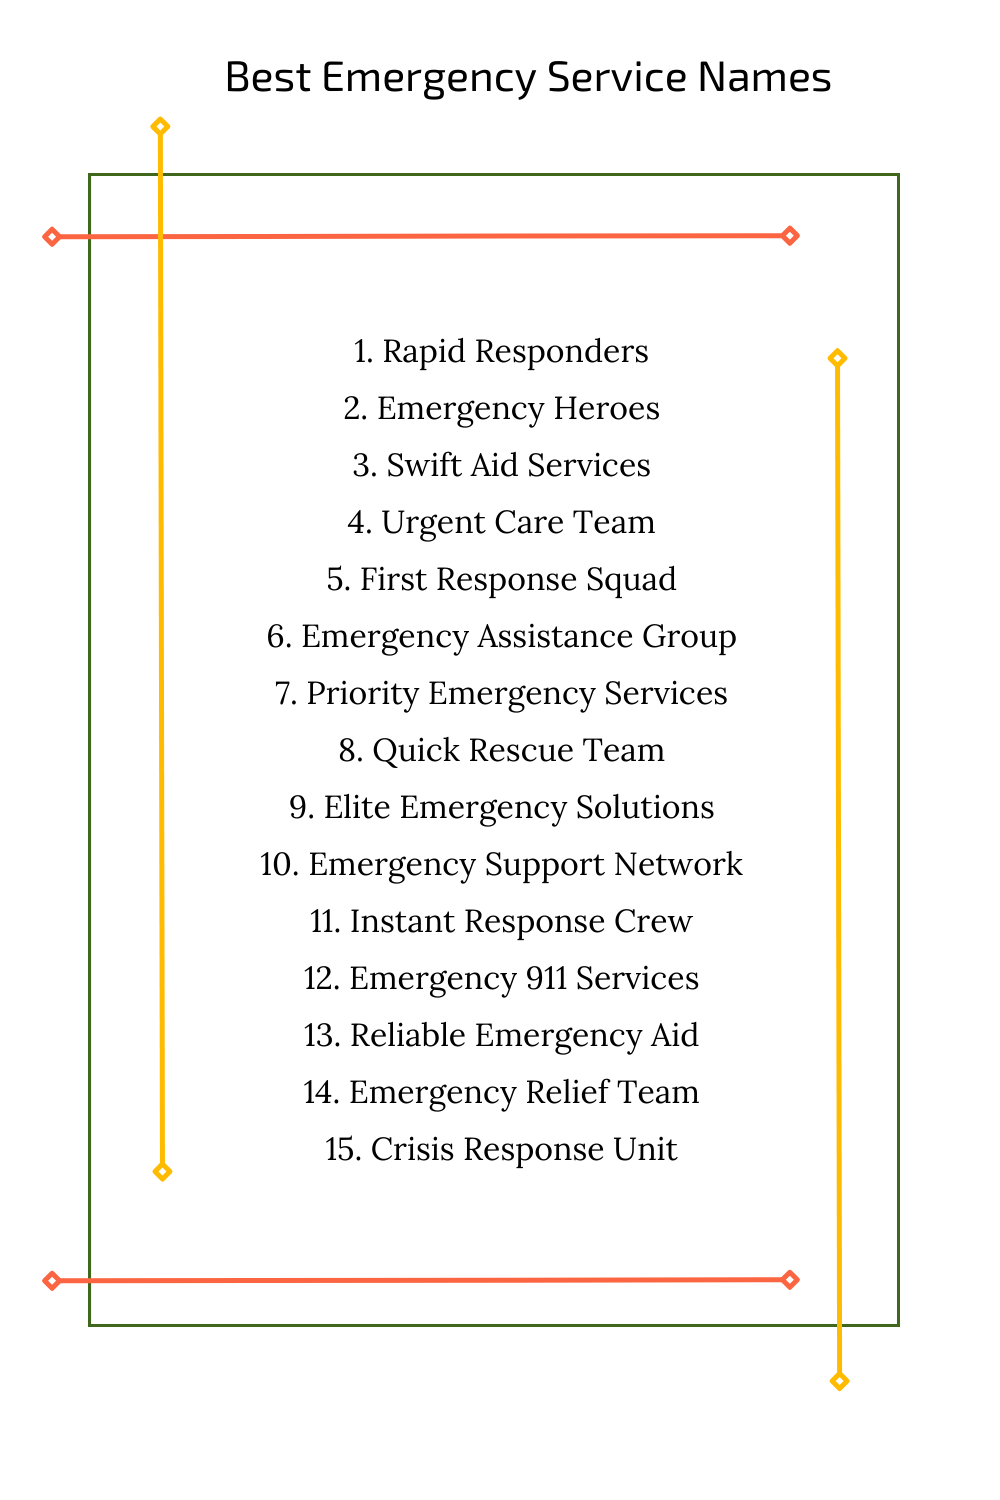 Best Emergency Service Names